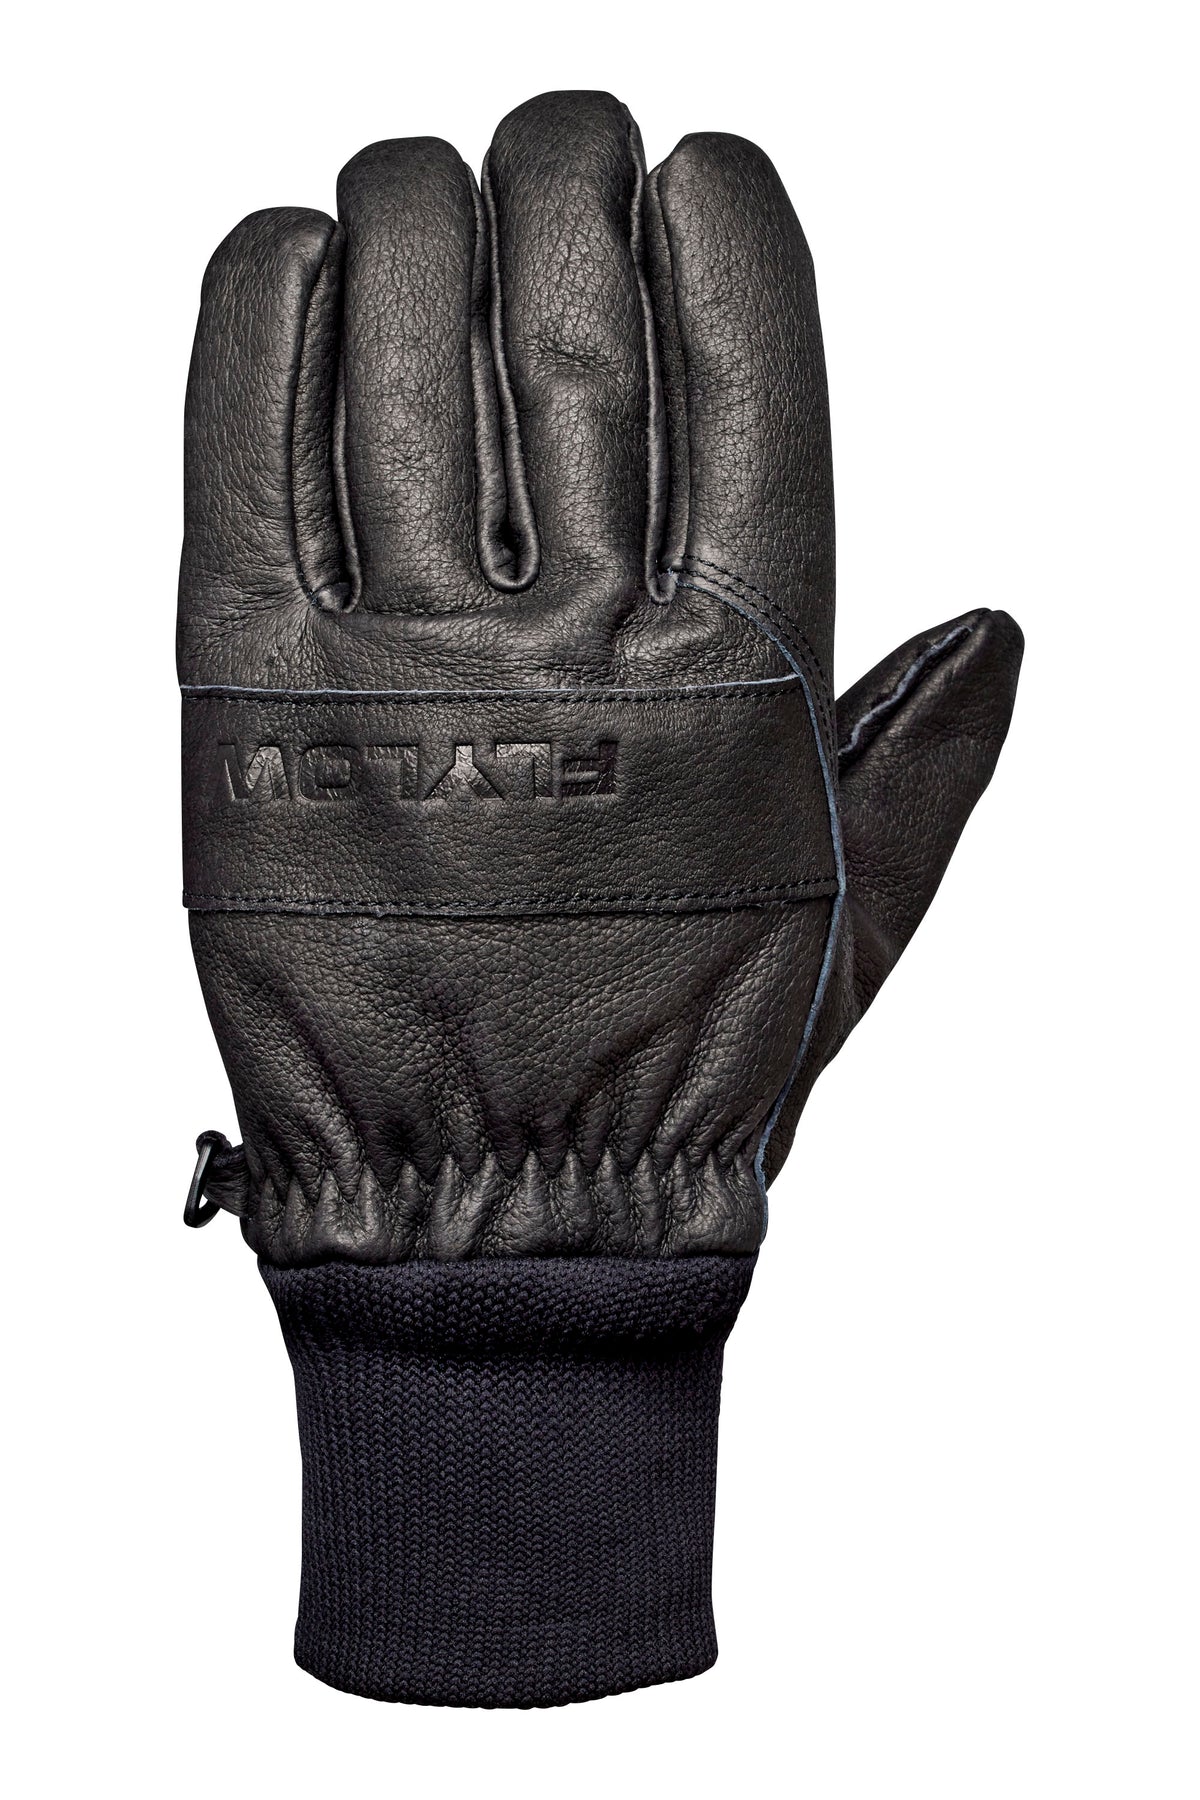 Ridge Glove PT - Black - M